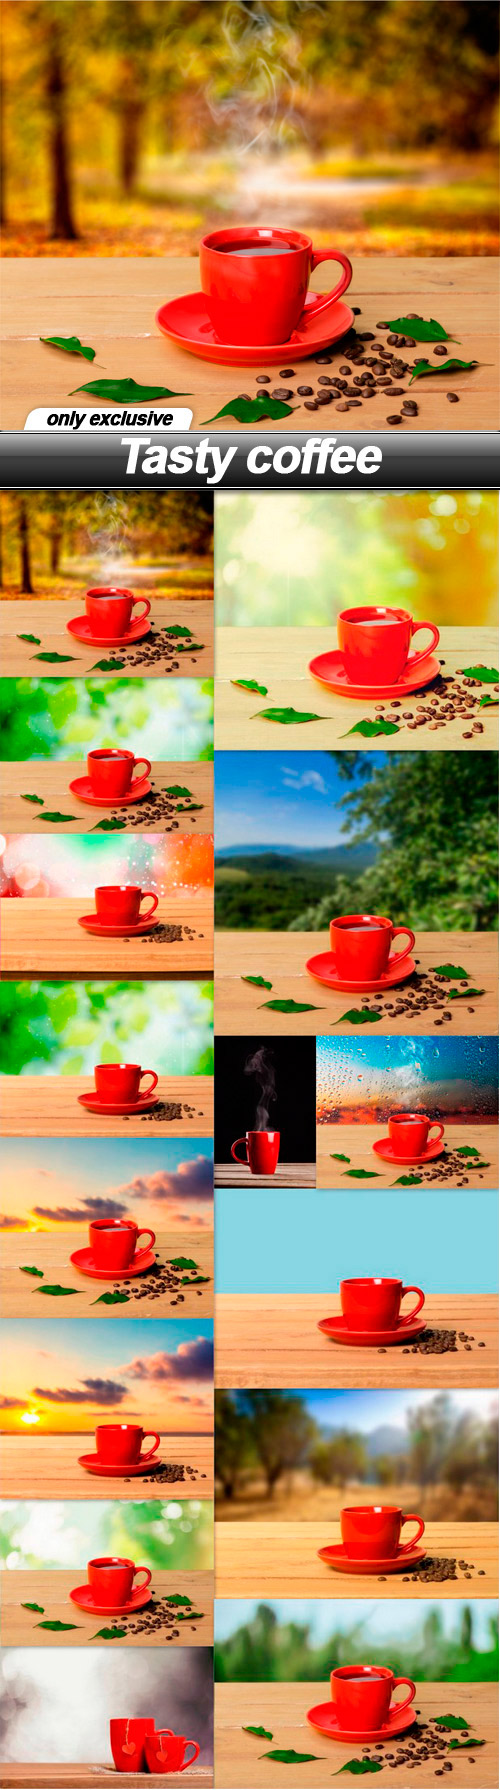 Tasty coffee - 15 UHQ JPEG